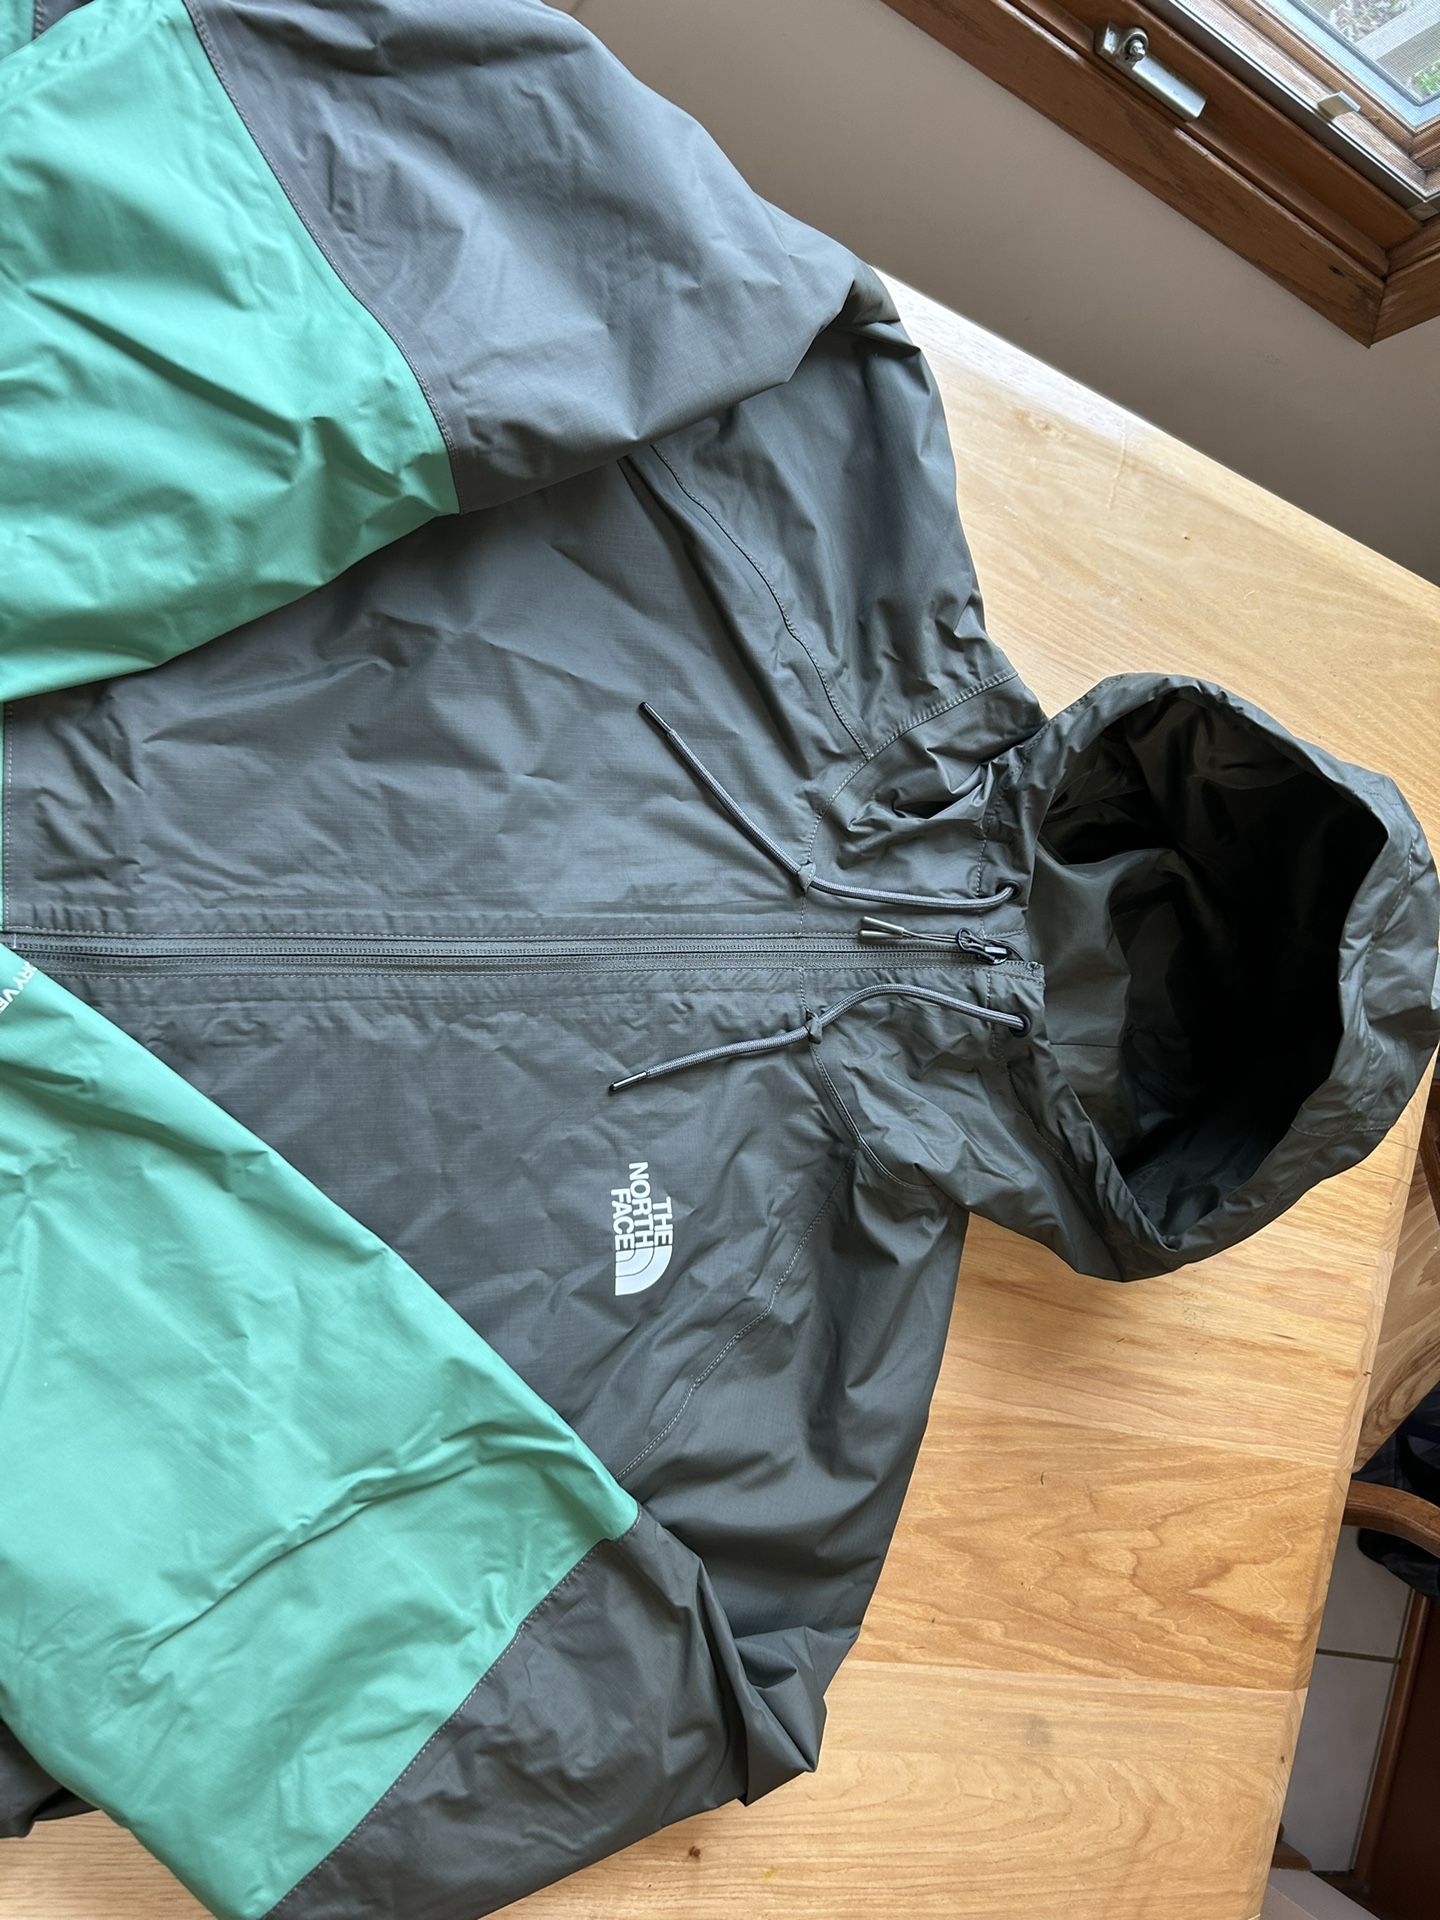 Men’s North Face Rain/Wind Jacket - Size XXL